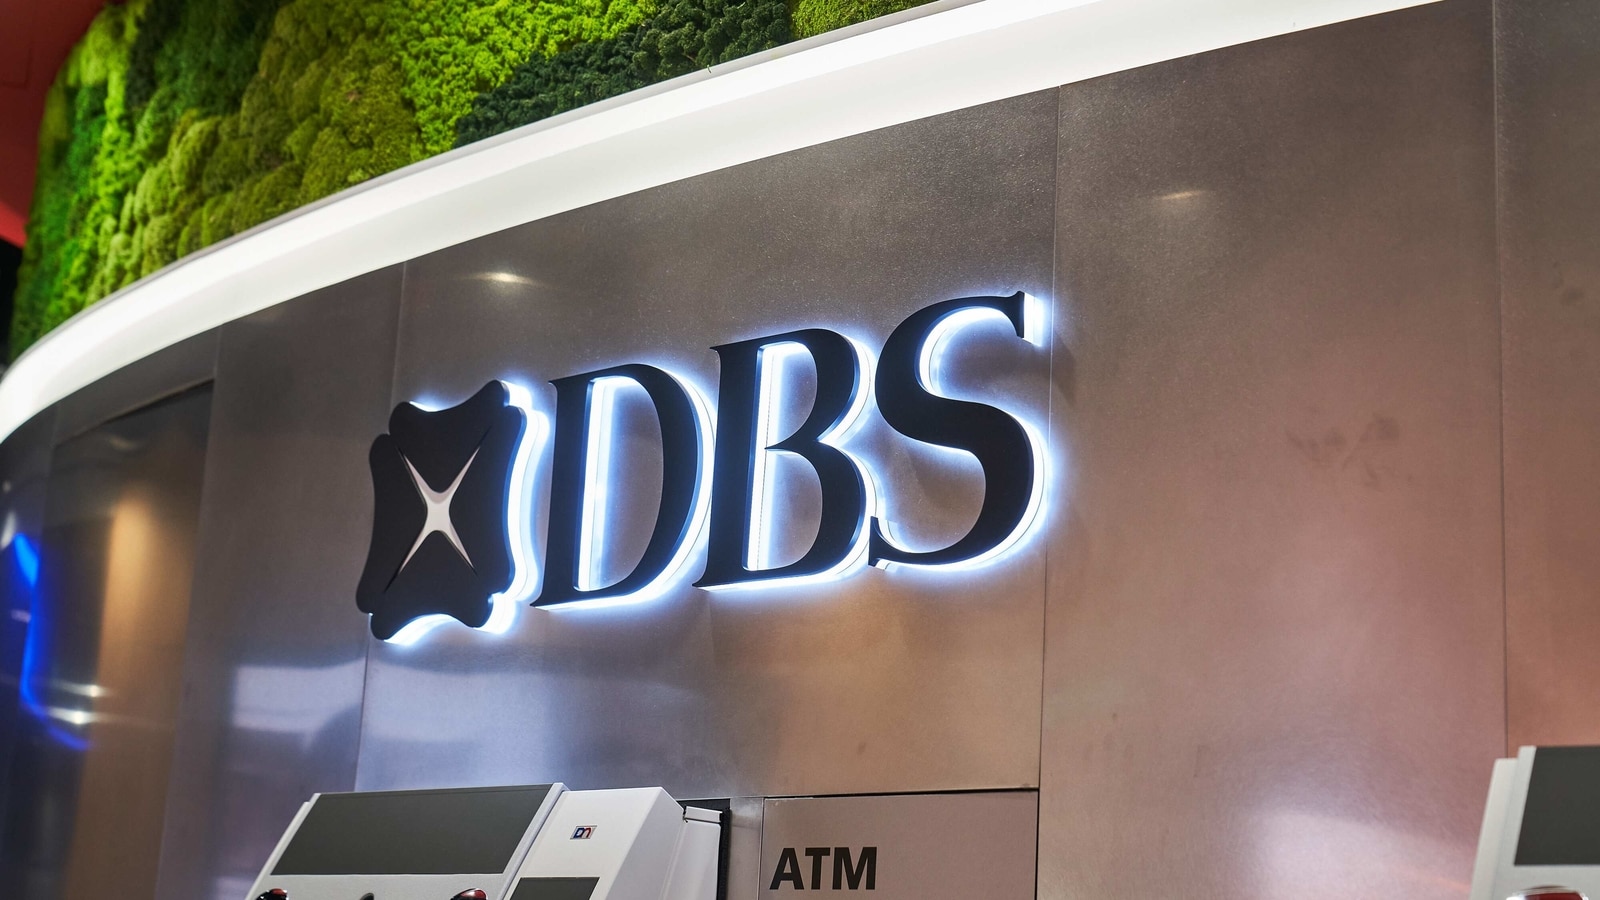 Dbs Bank Indonesia